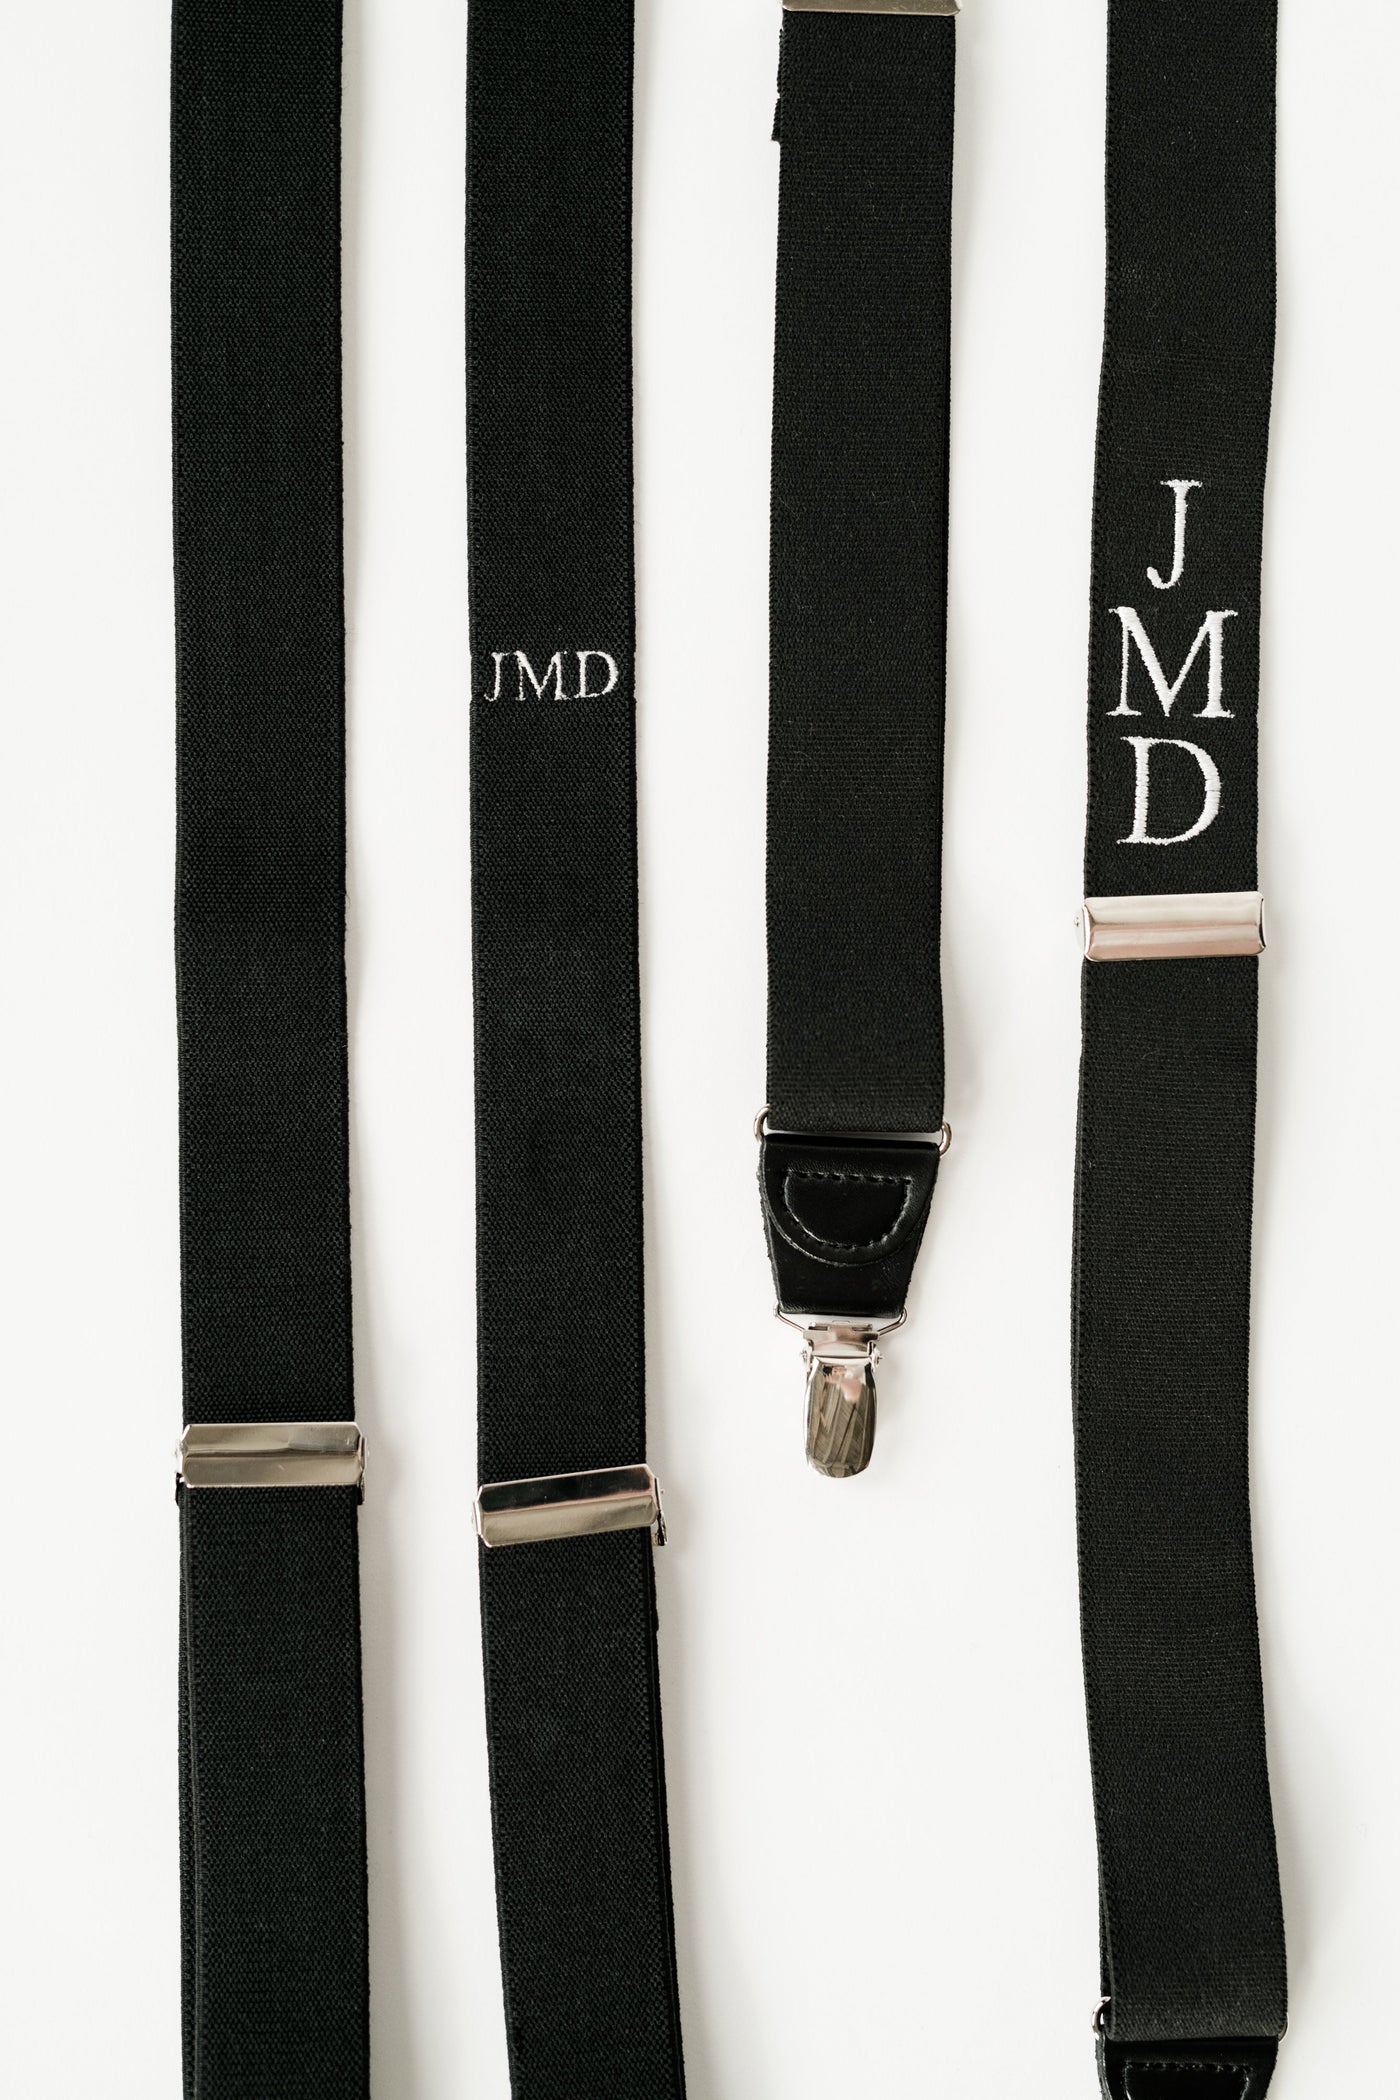 Jeffrey Suspender, Bradley Bow Tie, Joel Handkerchief Bundle | Set of 7